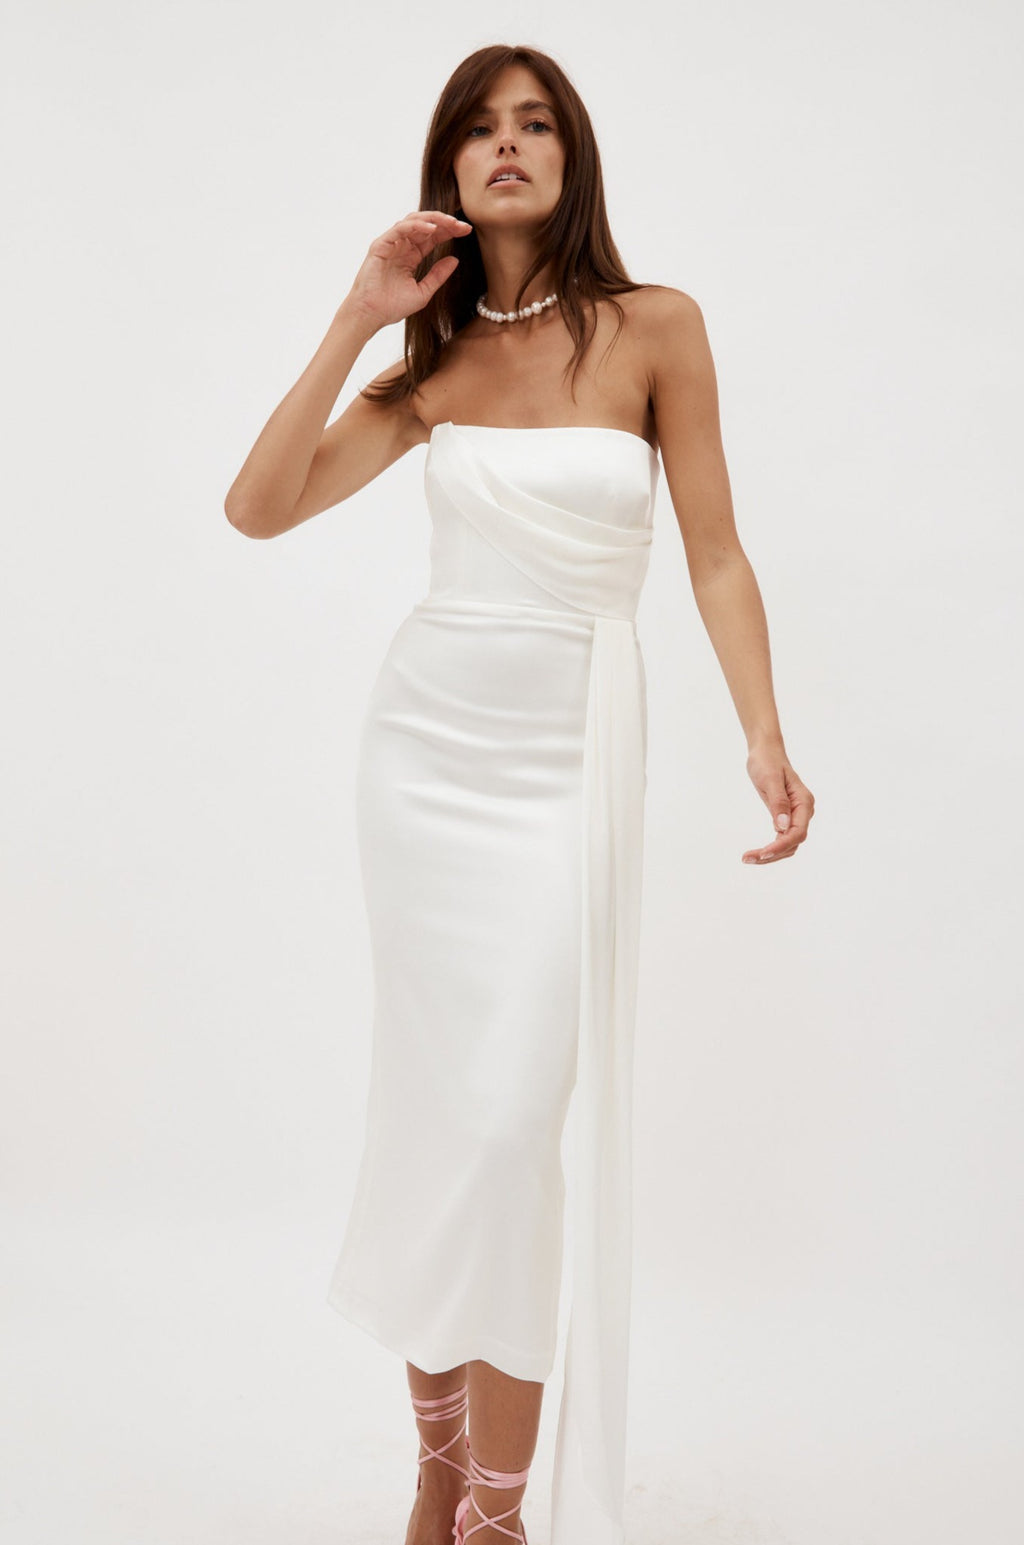 Satin Crepe Strapless White Dress with Drape